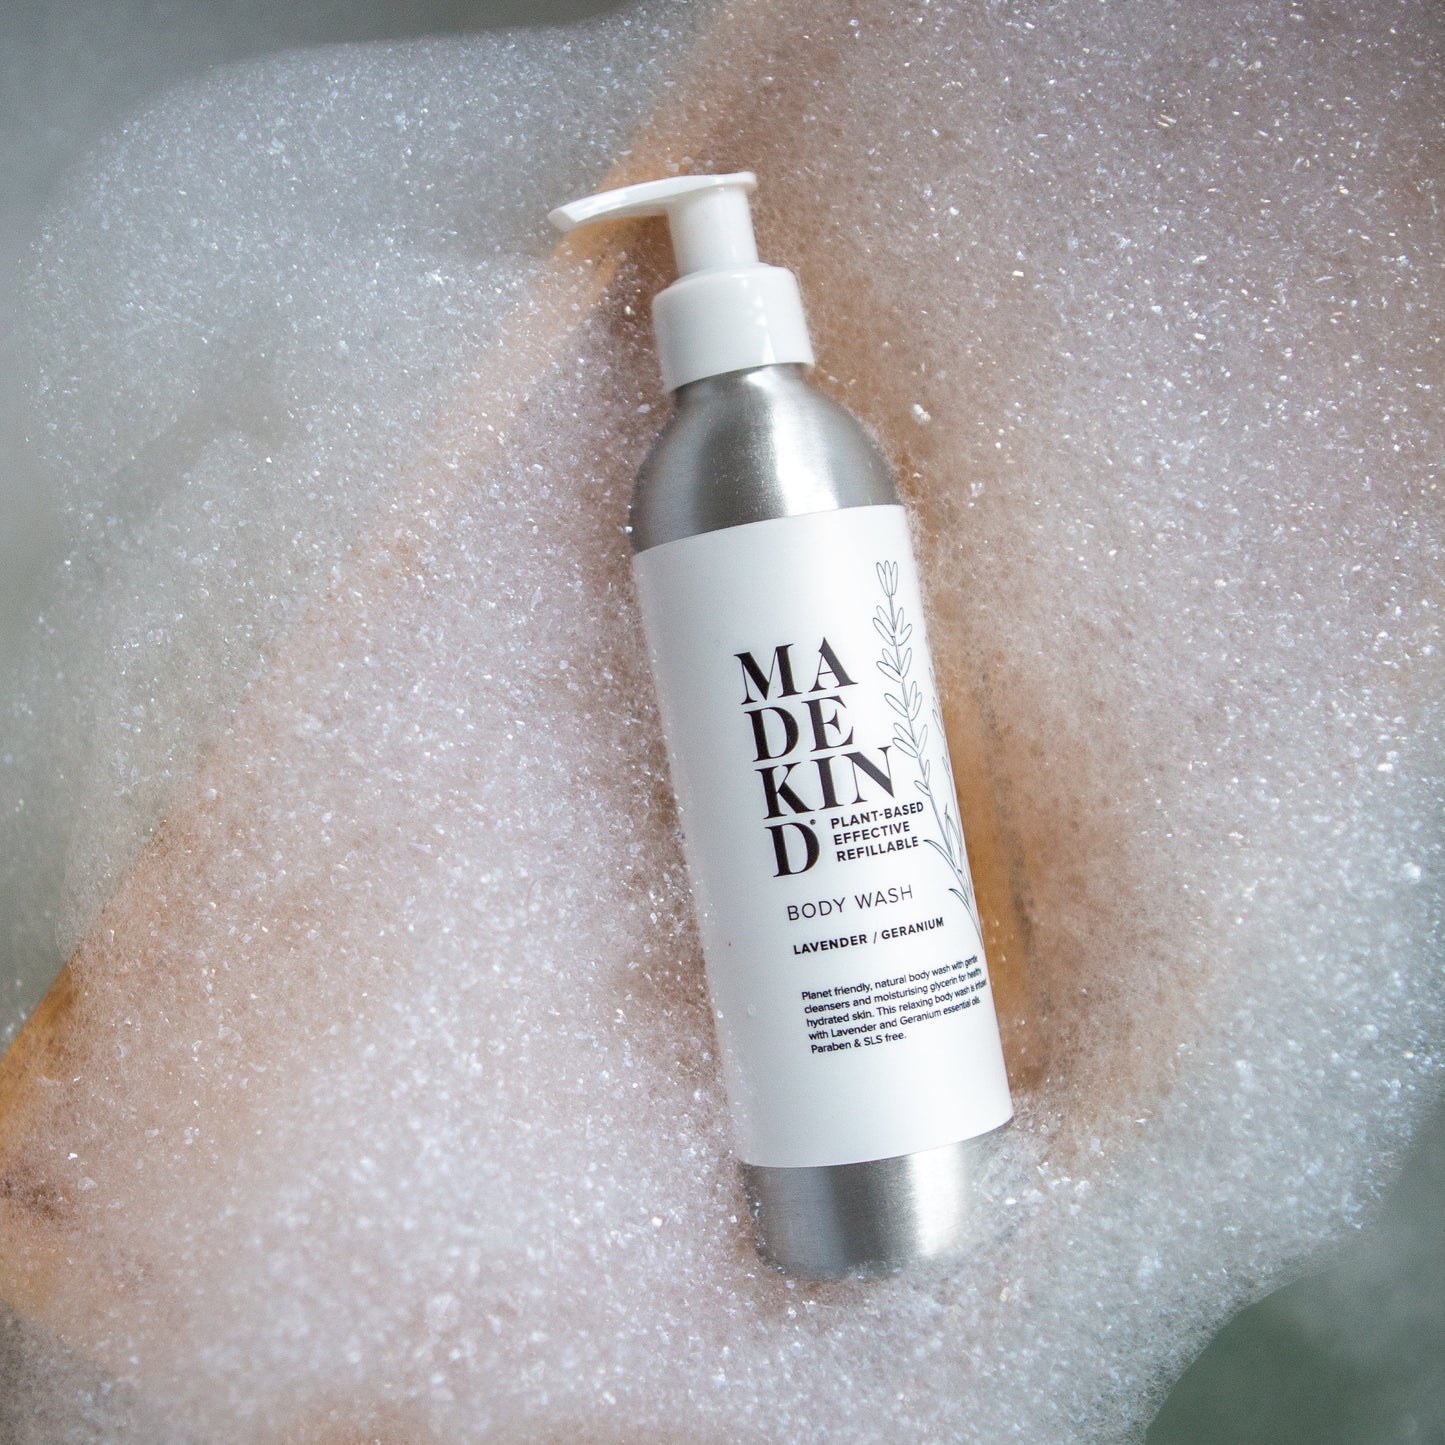 Madekind natural Body wash, lavender & geranium scented shower gel